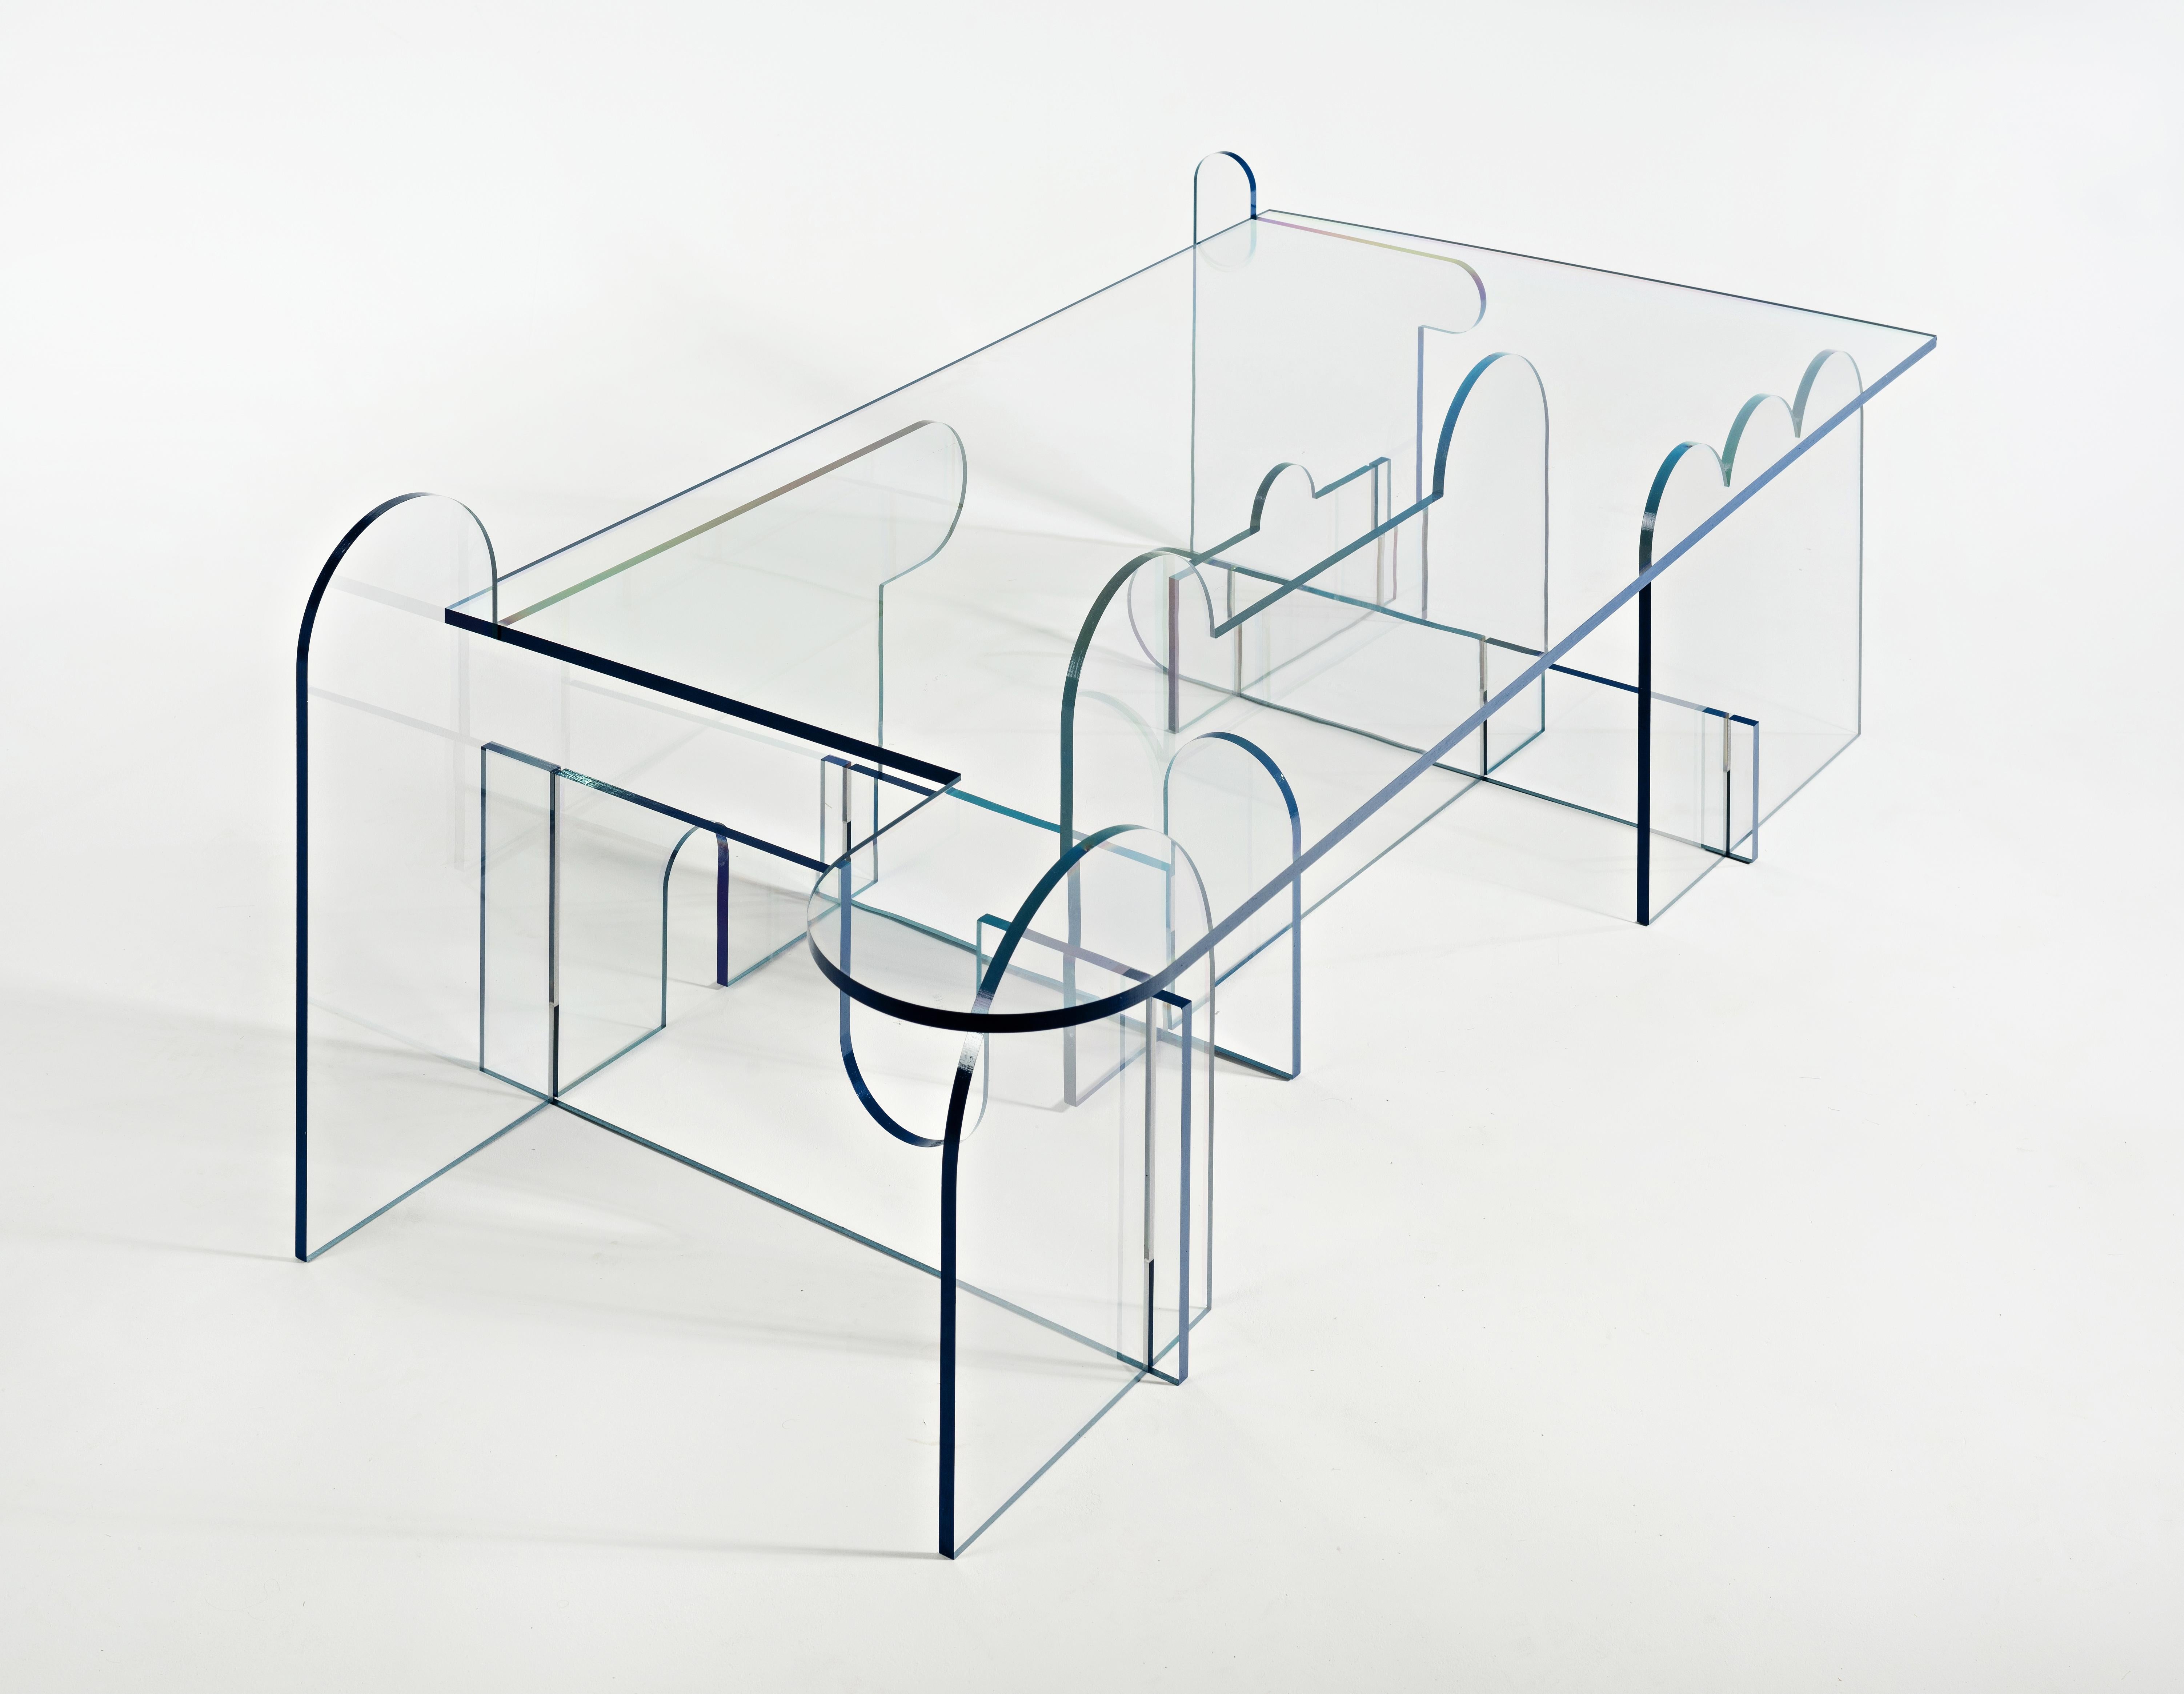 Clear Lexan table by Phaedo.
Dimensions: W 30